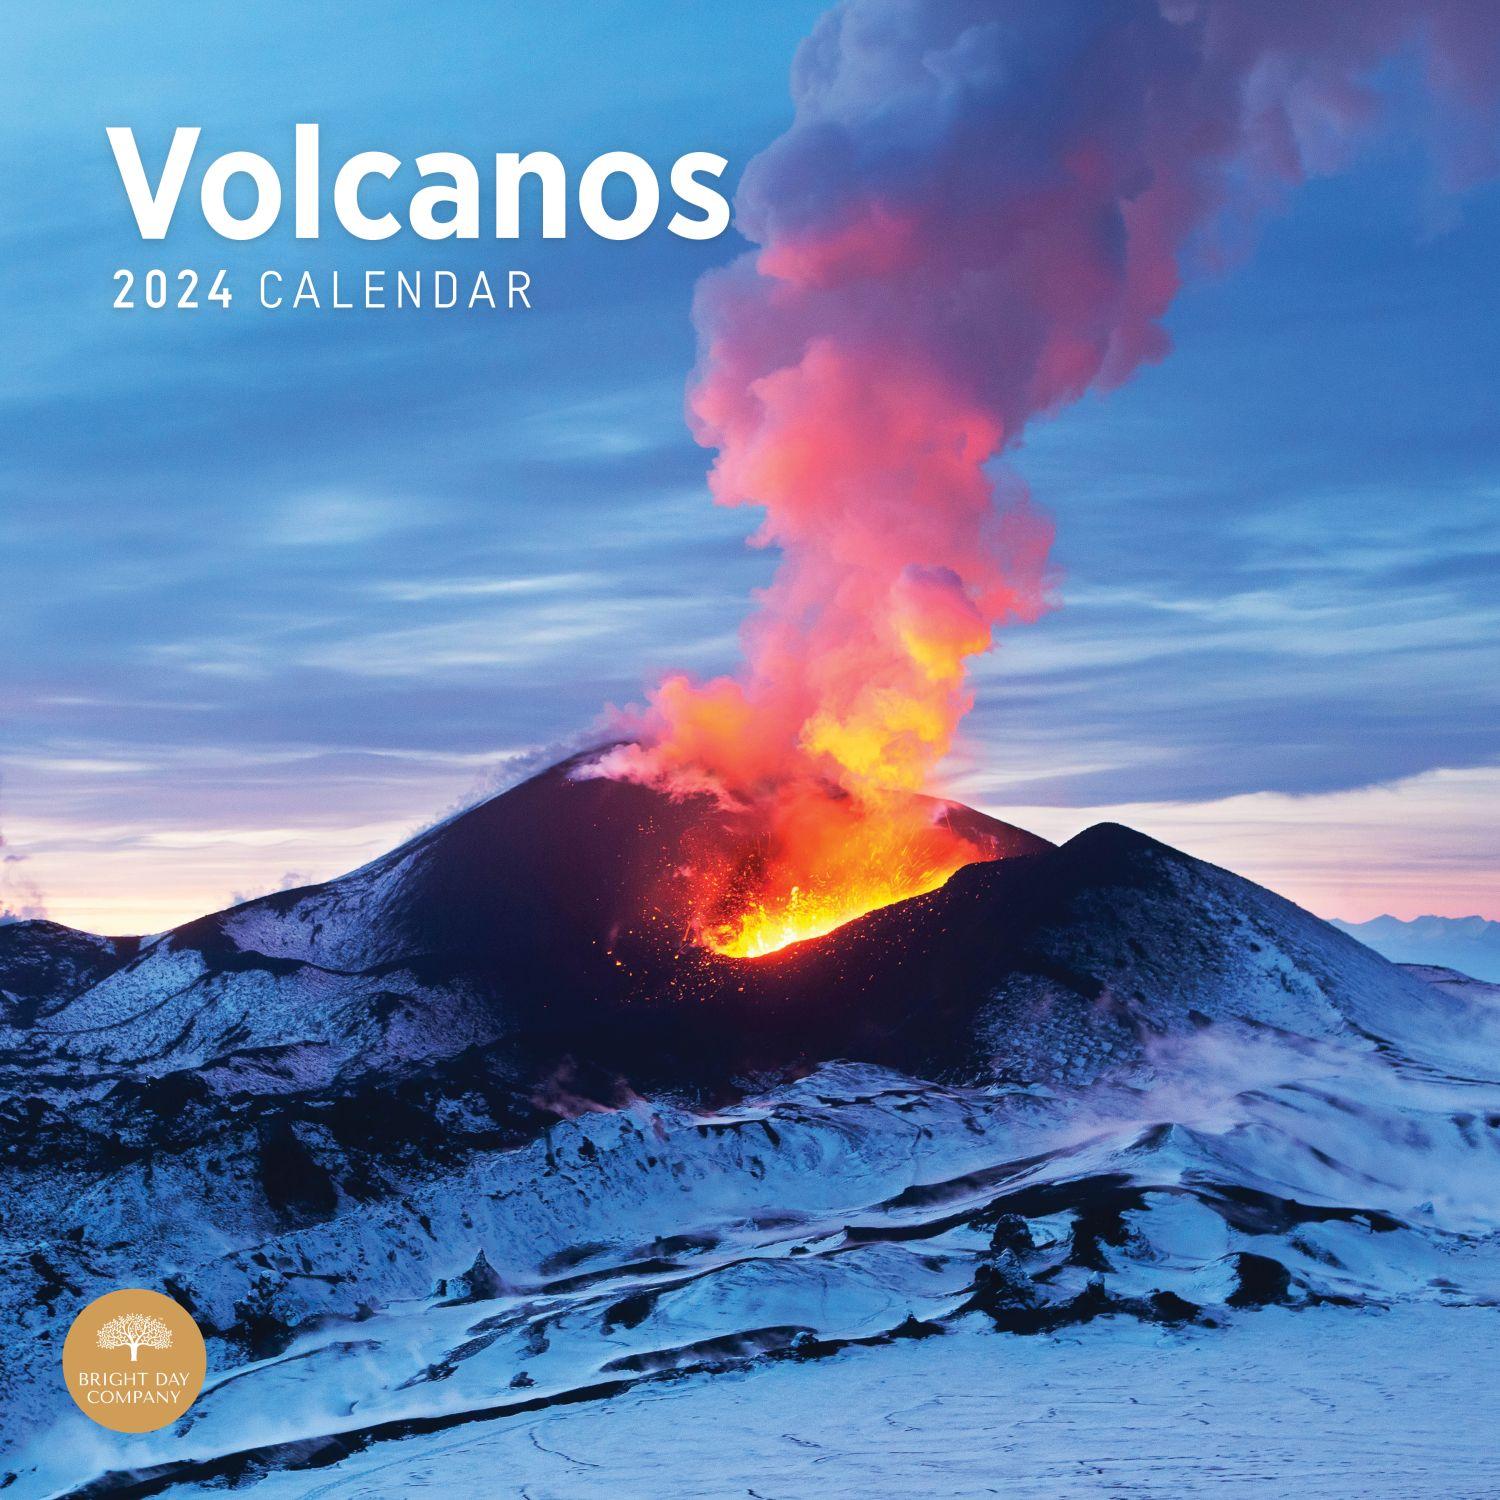 Volcanoes 2024 Wall Calendar - Calendars.com